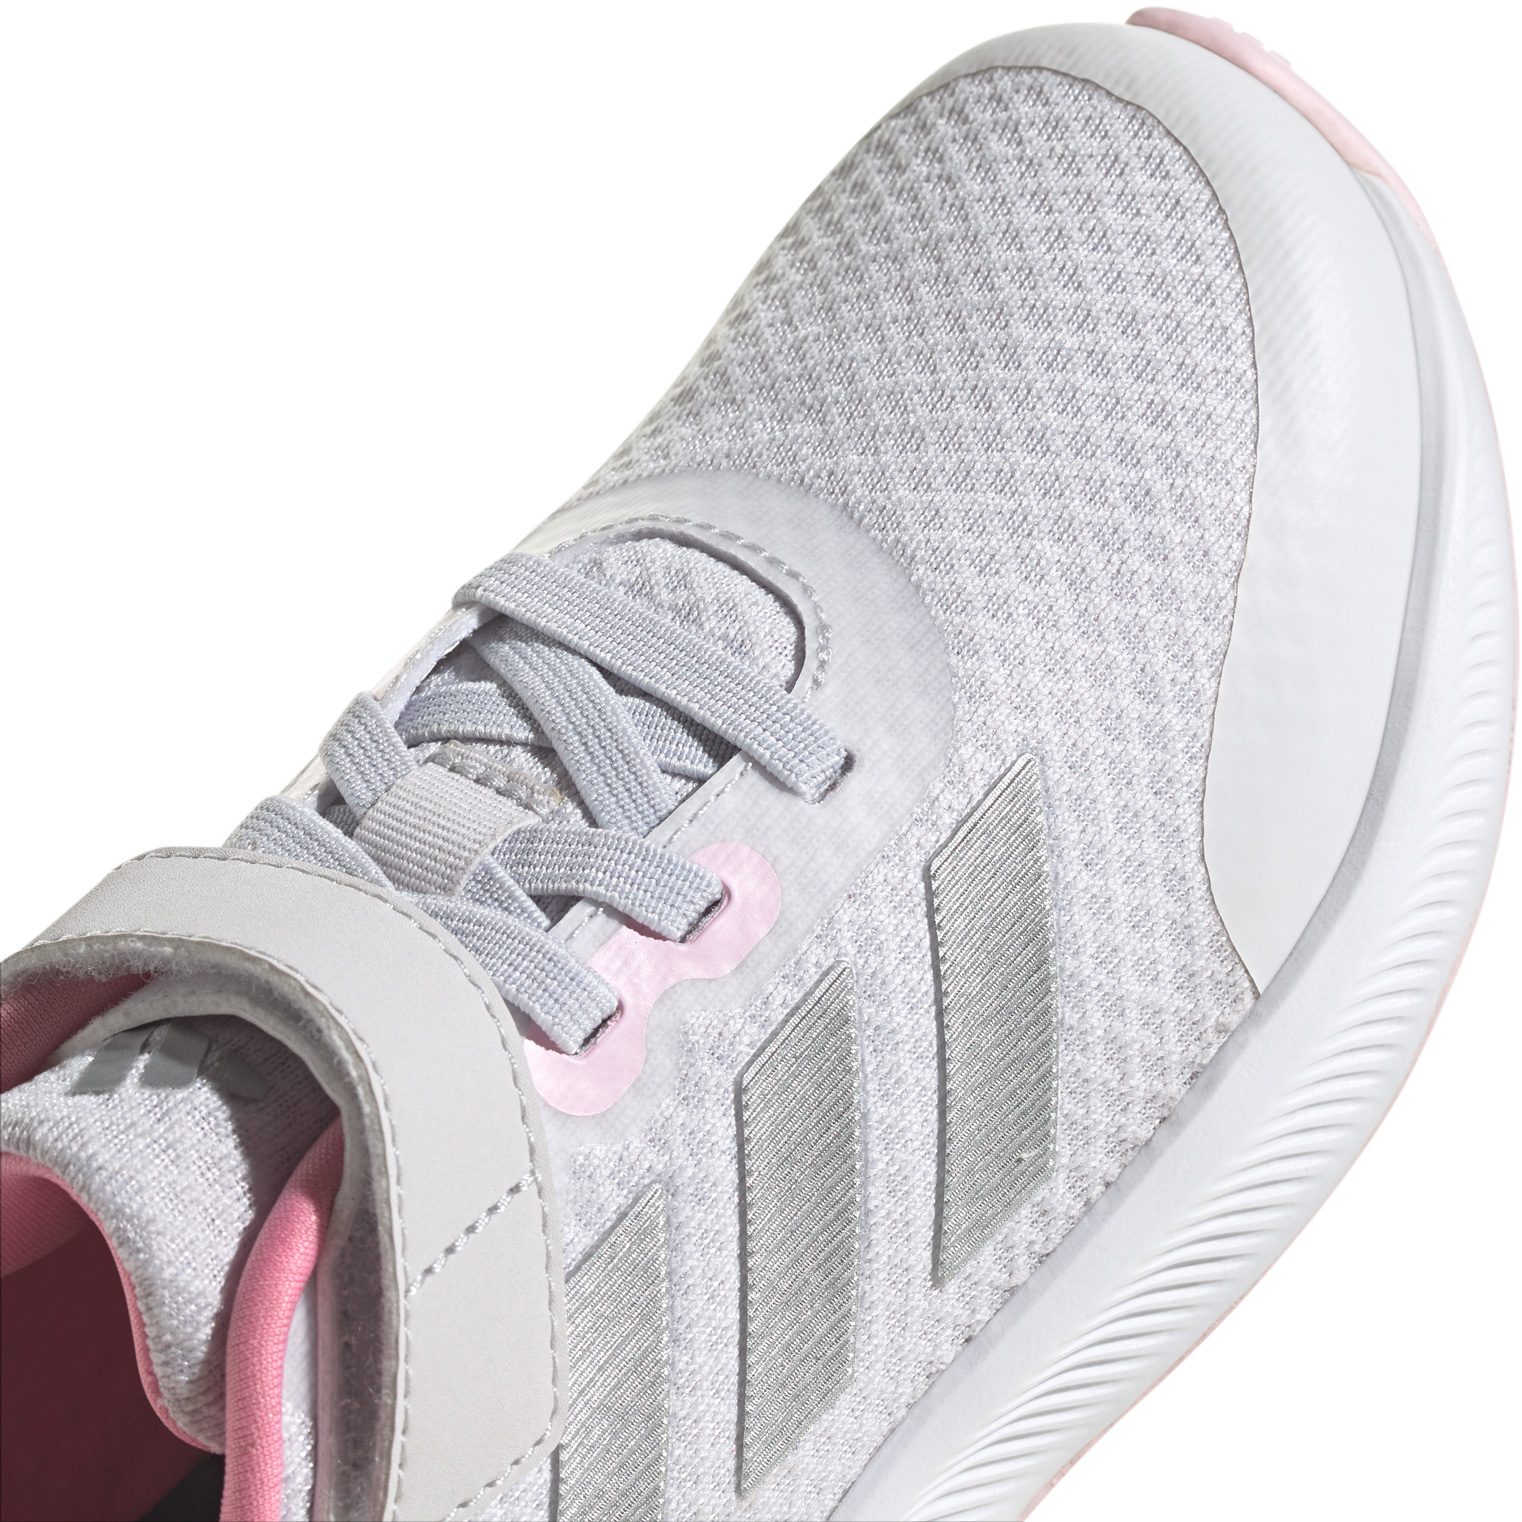 adidas - RunFalcon 3.0 Elastic Lace Top Strap Laufschuhe Kinder dash grey  kaufen im Sport Bittl Shop